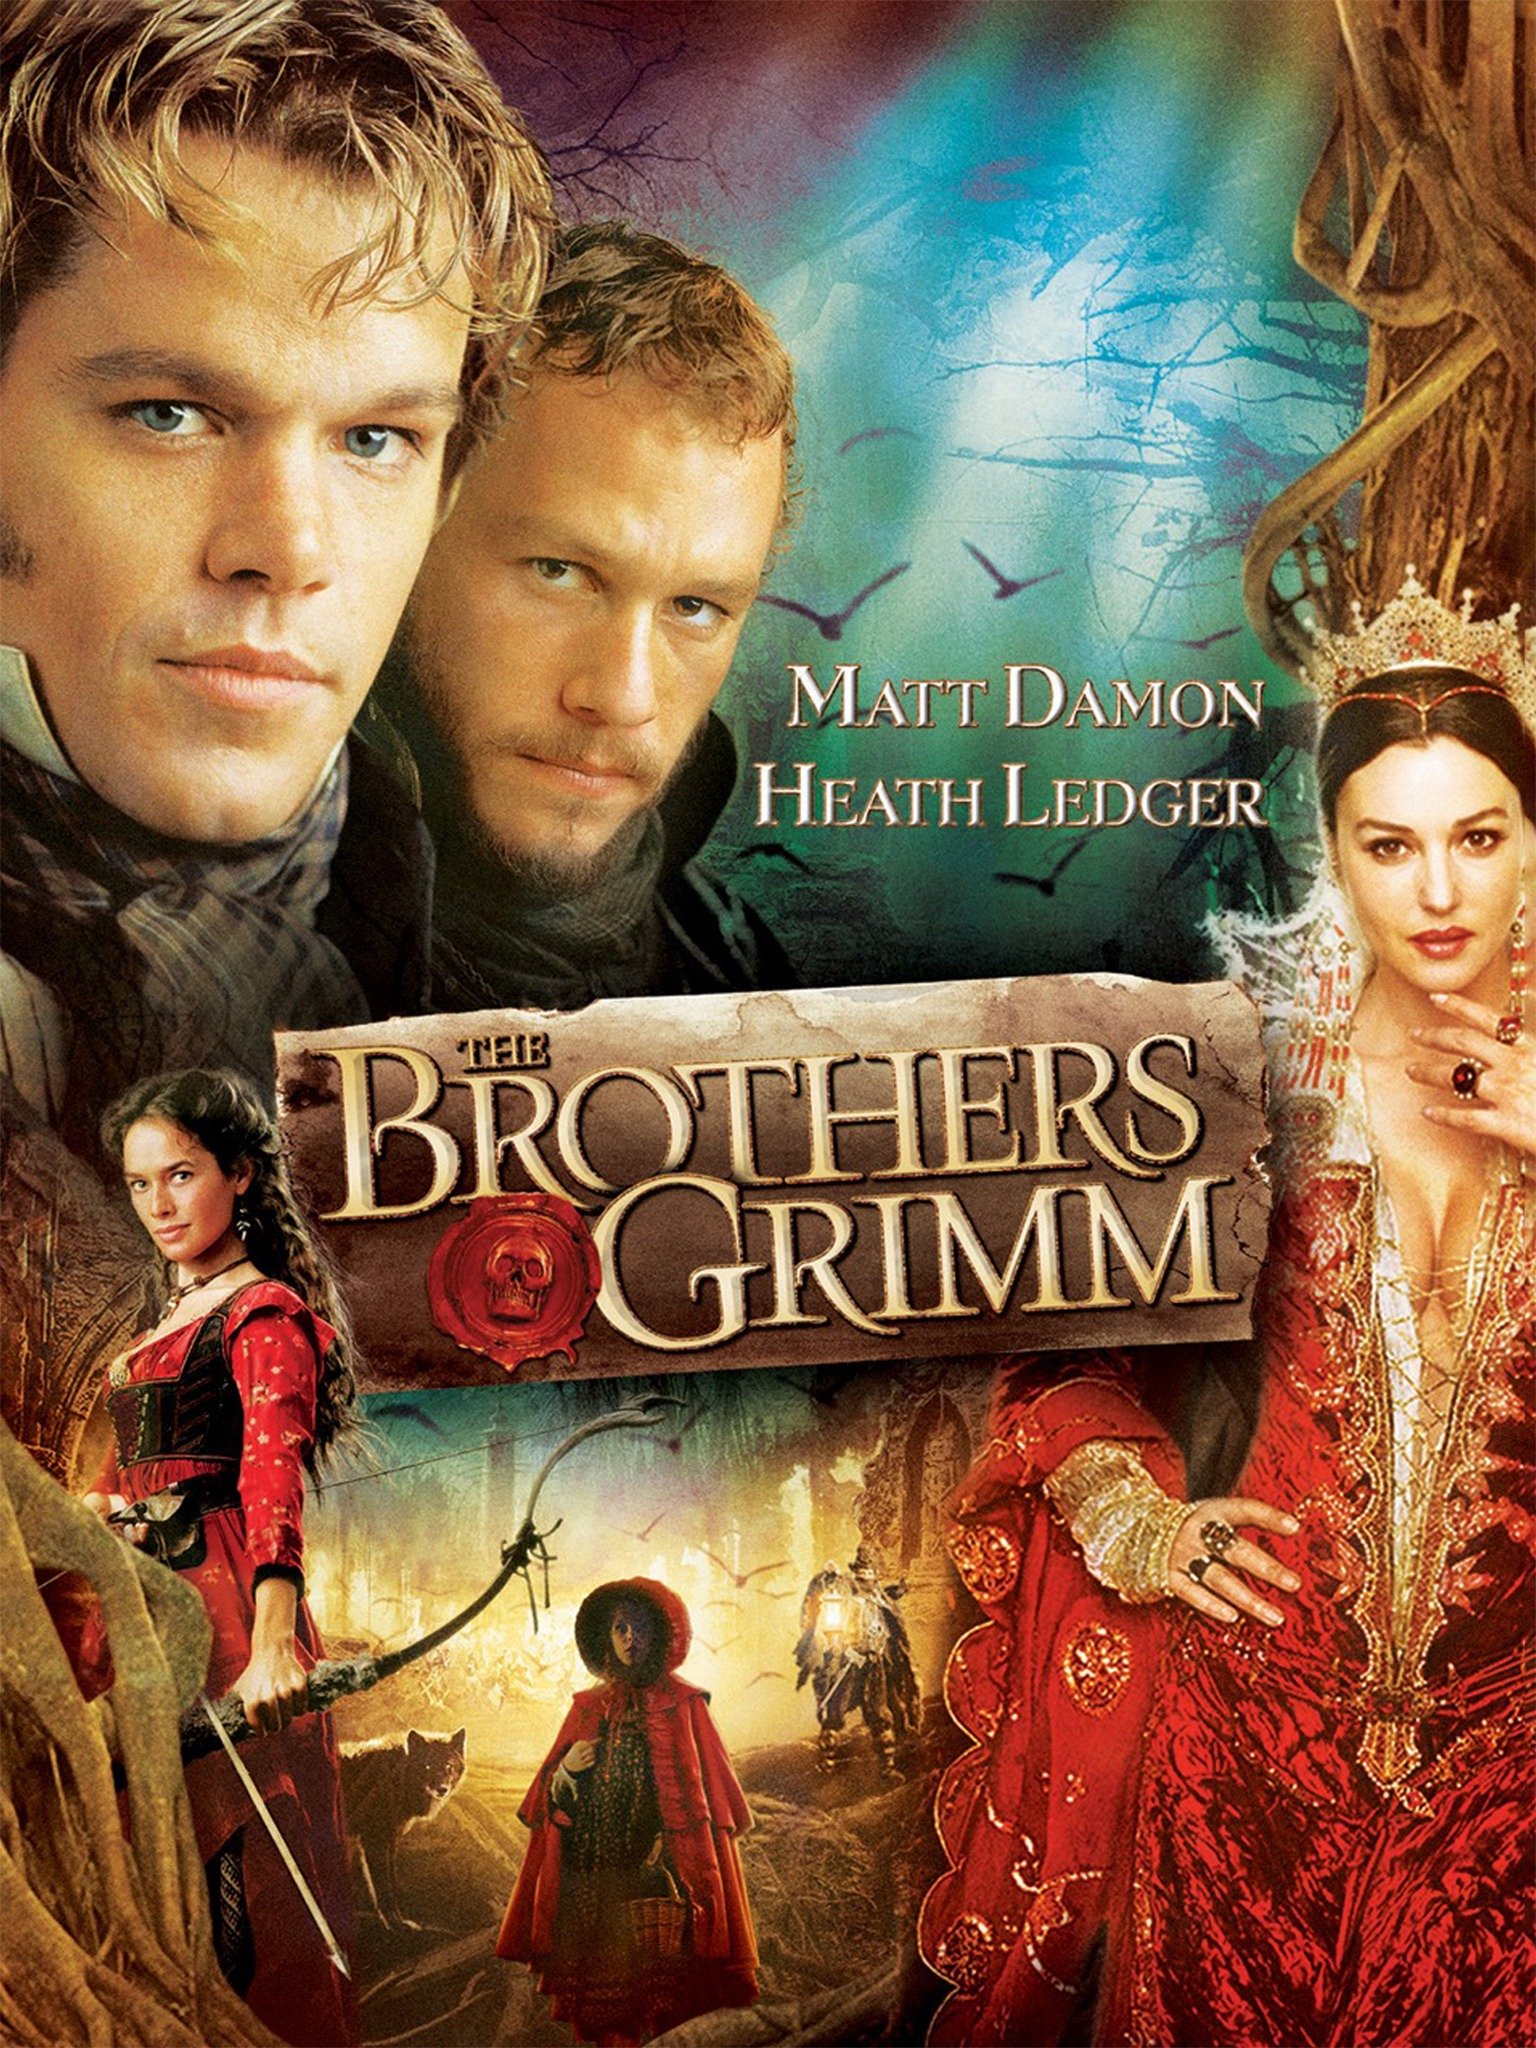 Matt Damon And Heath Ledger In The Brothers Grimm (2005)